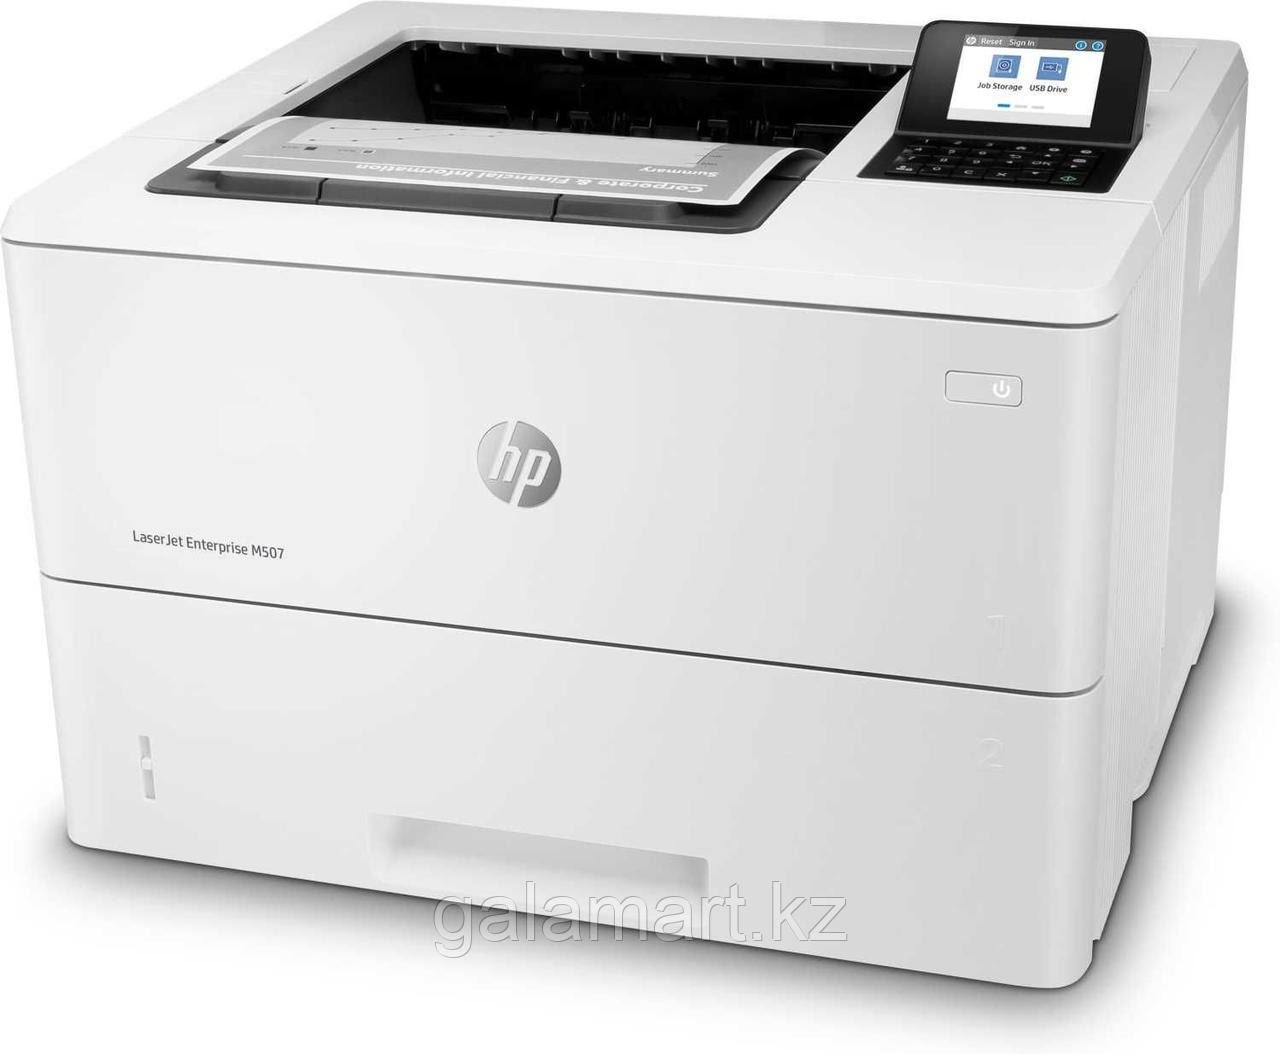 Принтер лазерный HP 1PV87A LaserJet Enterprise M507dn Printer (A4),1200 dpi, 43 ppm, 512MB, 1.2Ghz, tray